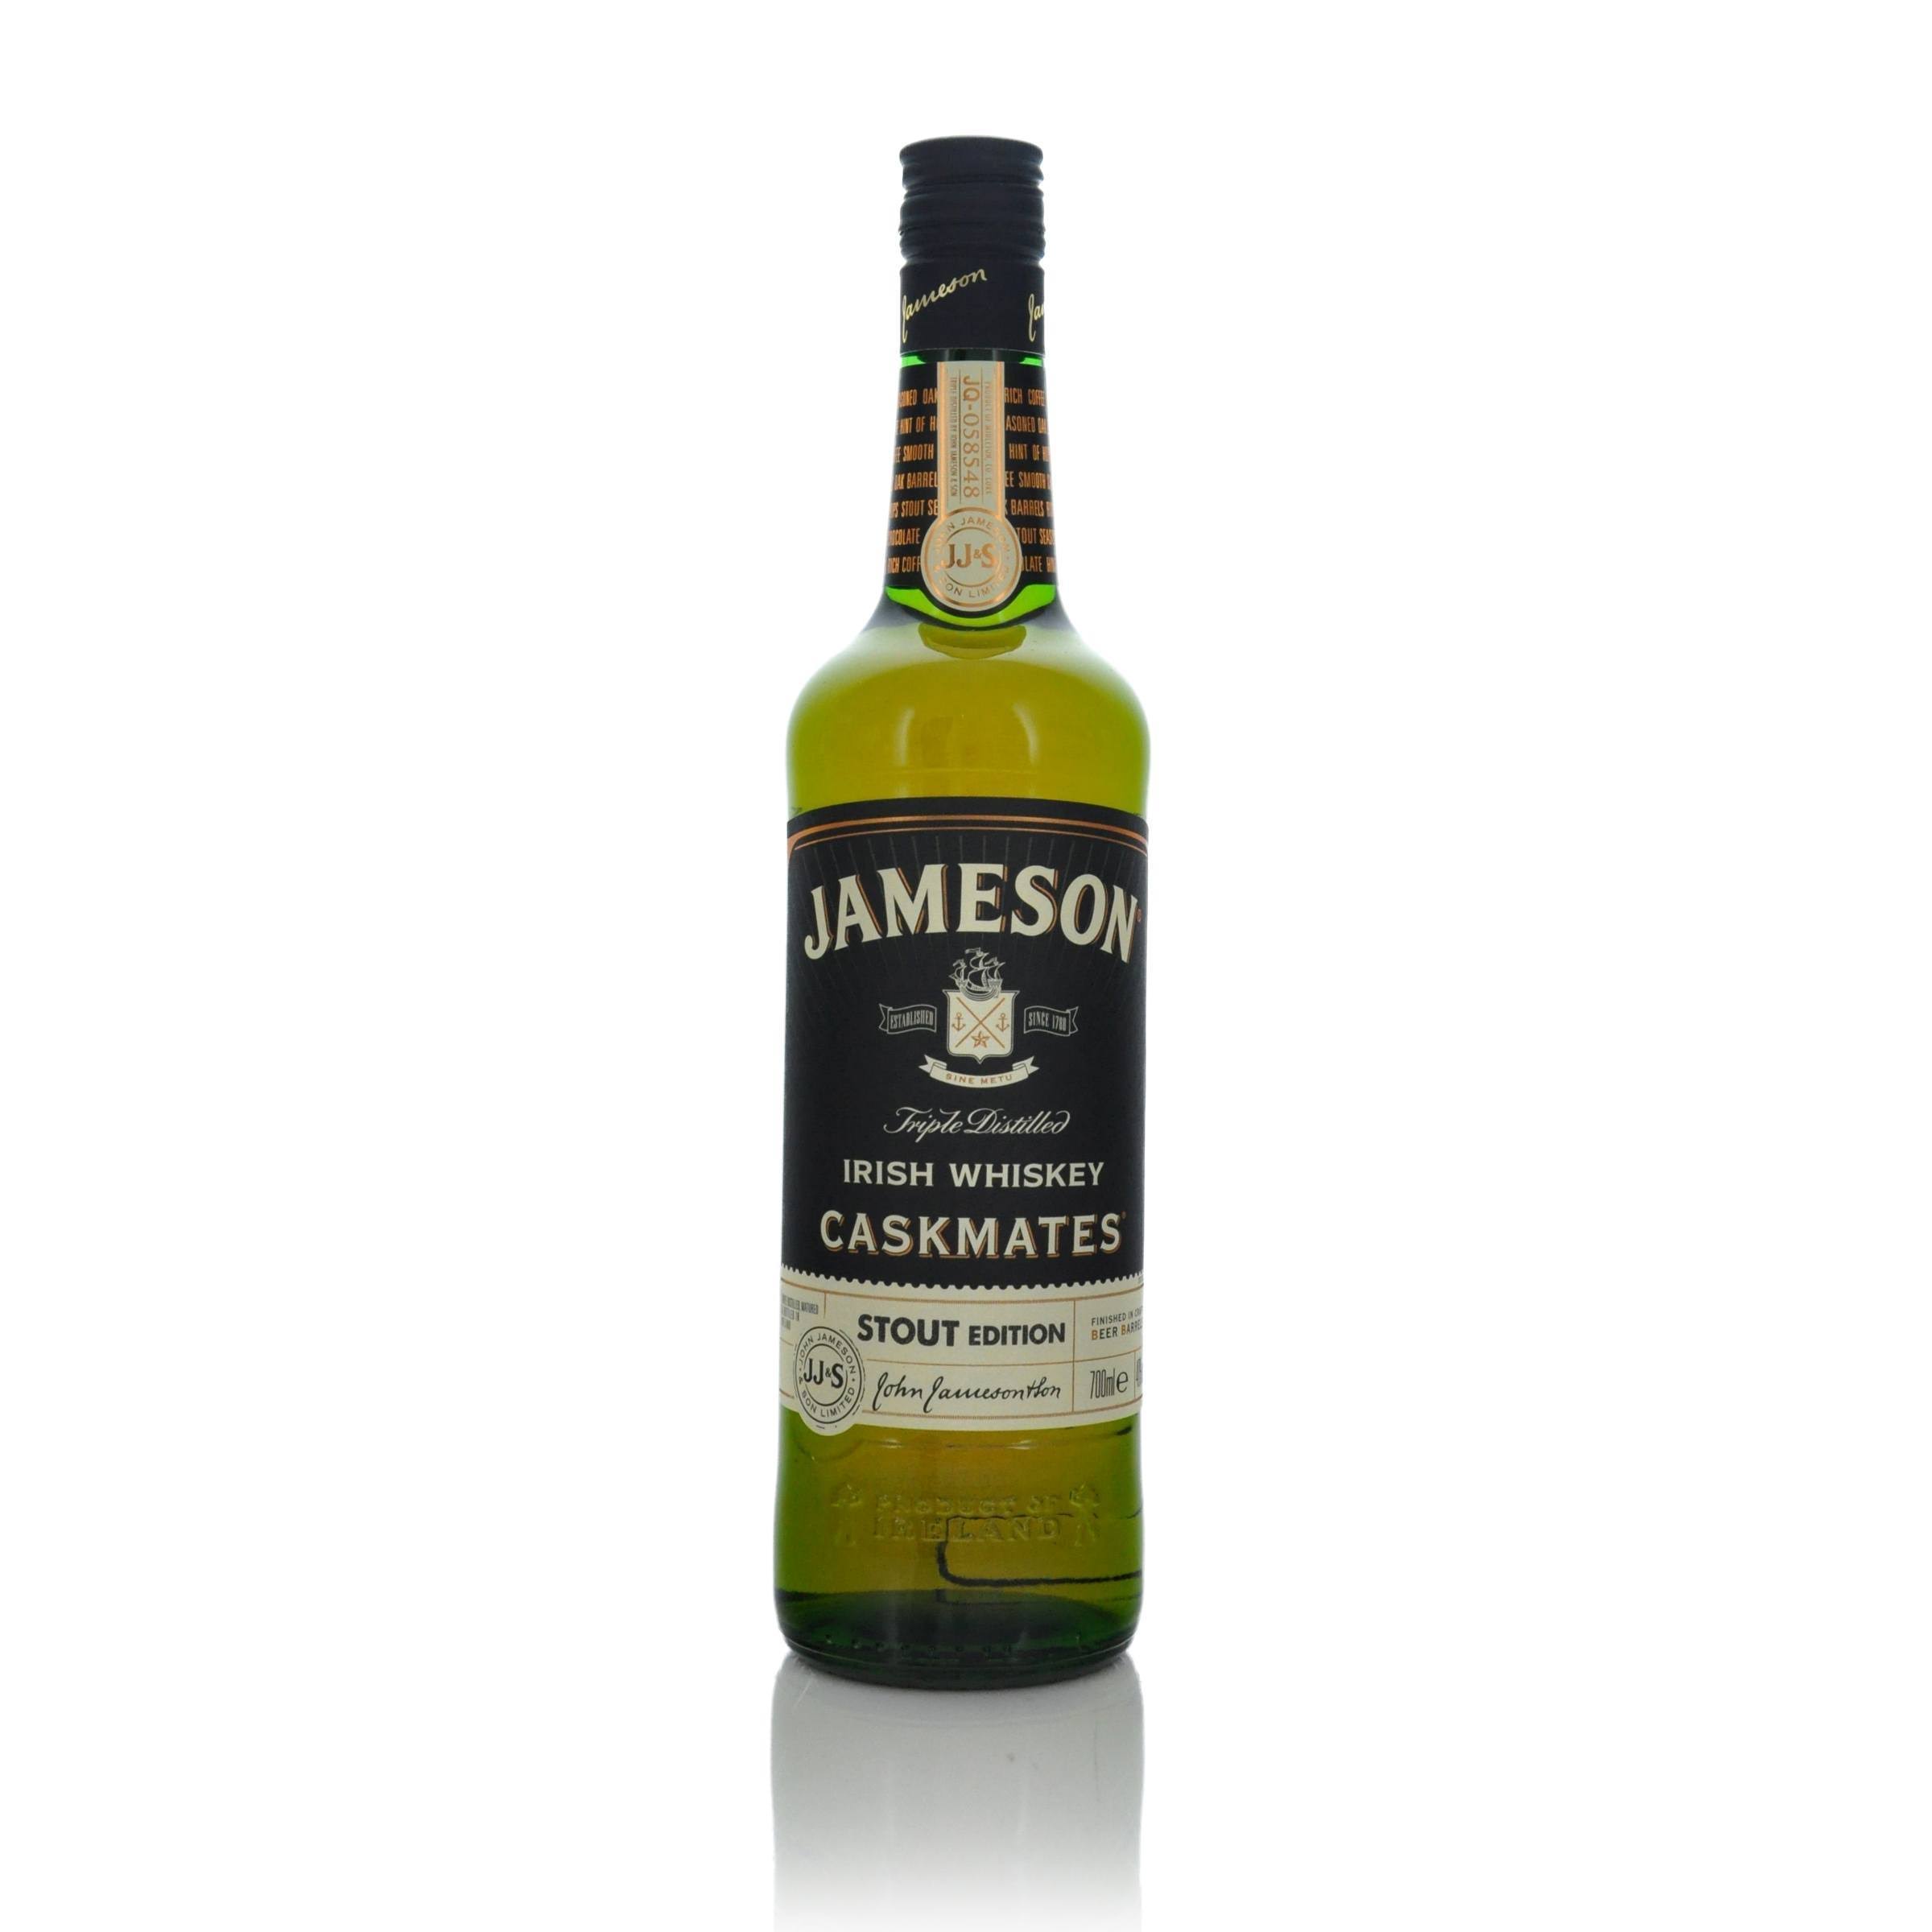 Jameson Caskmates Stout Edition Irish Whiskey - 700ml